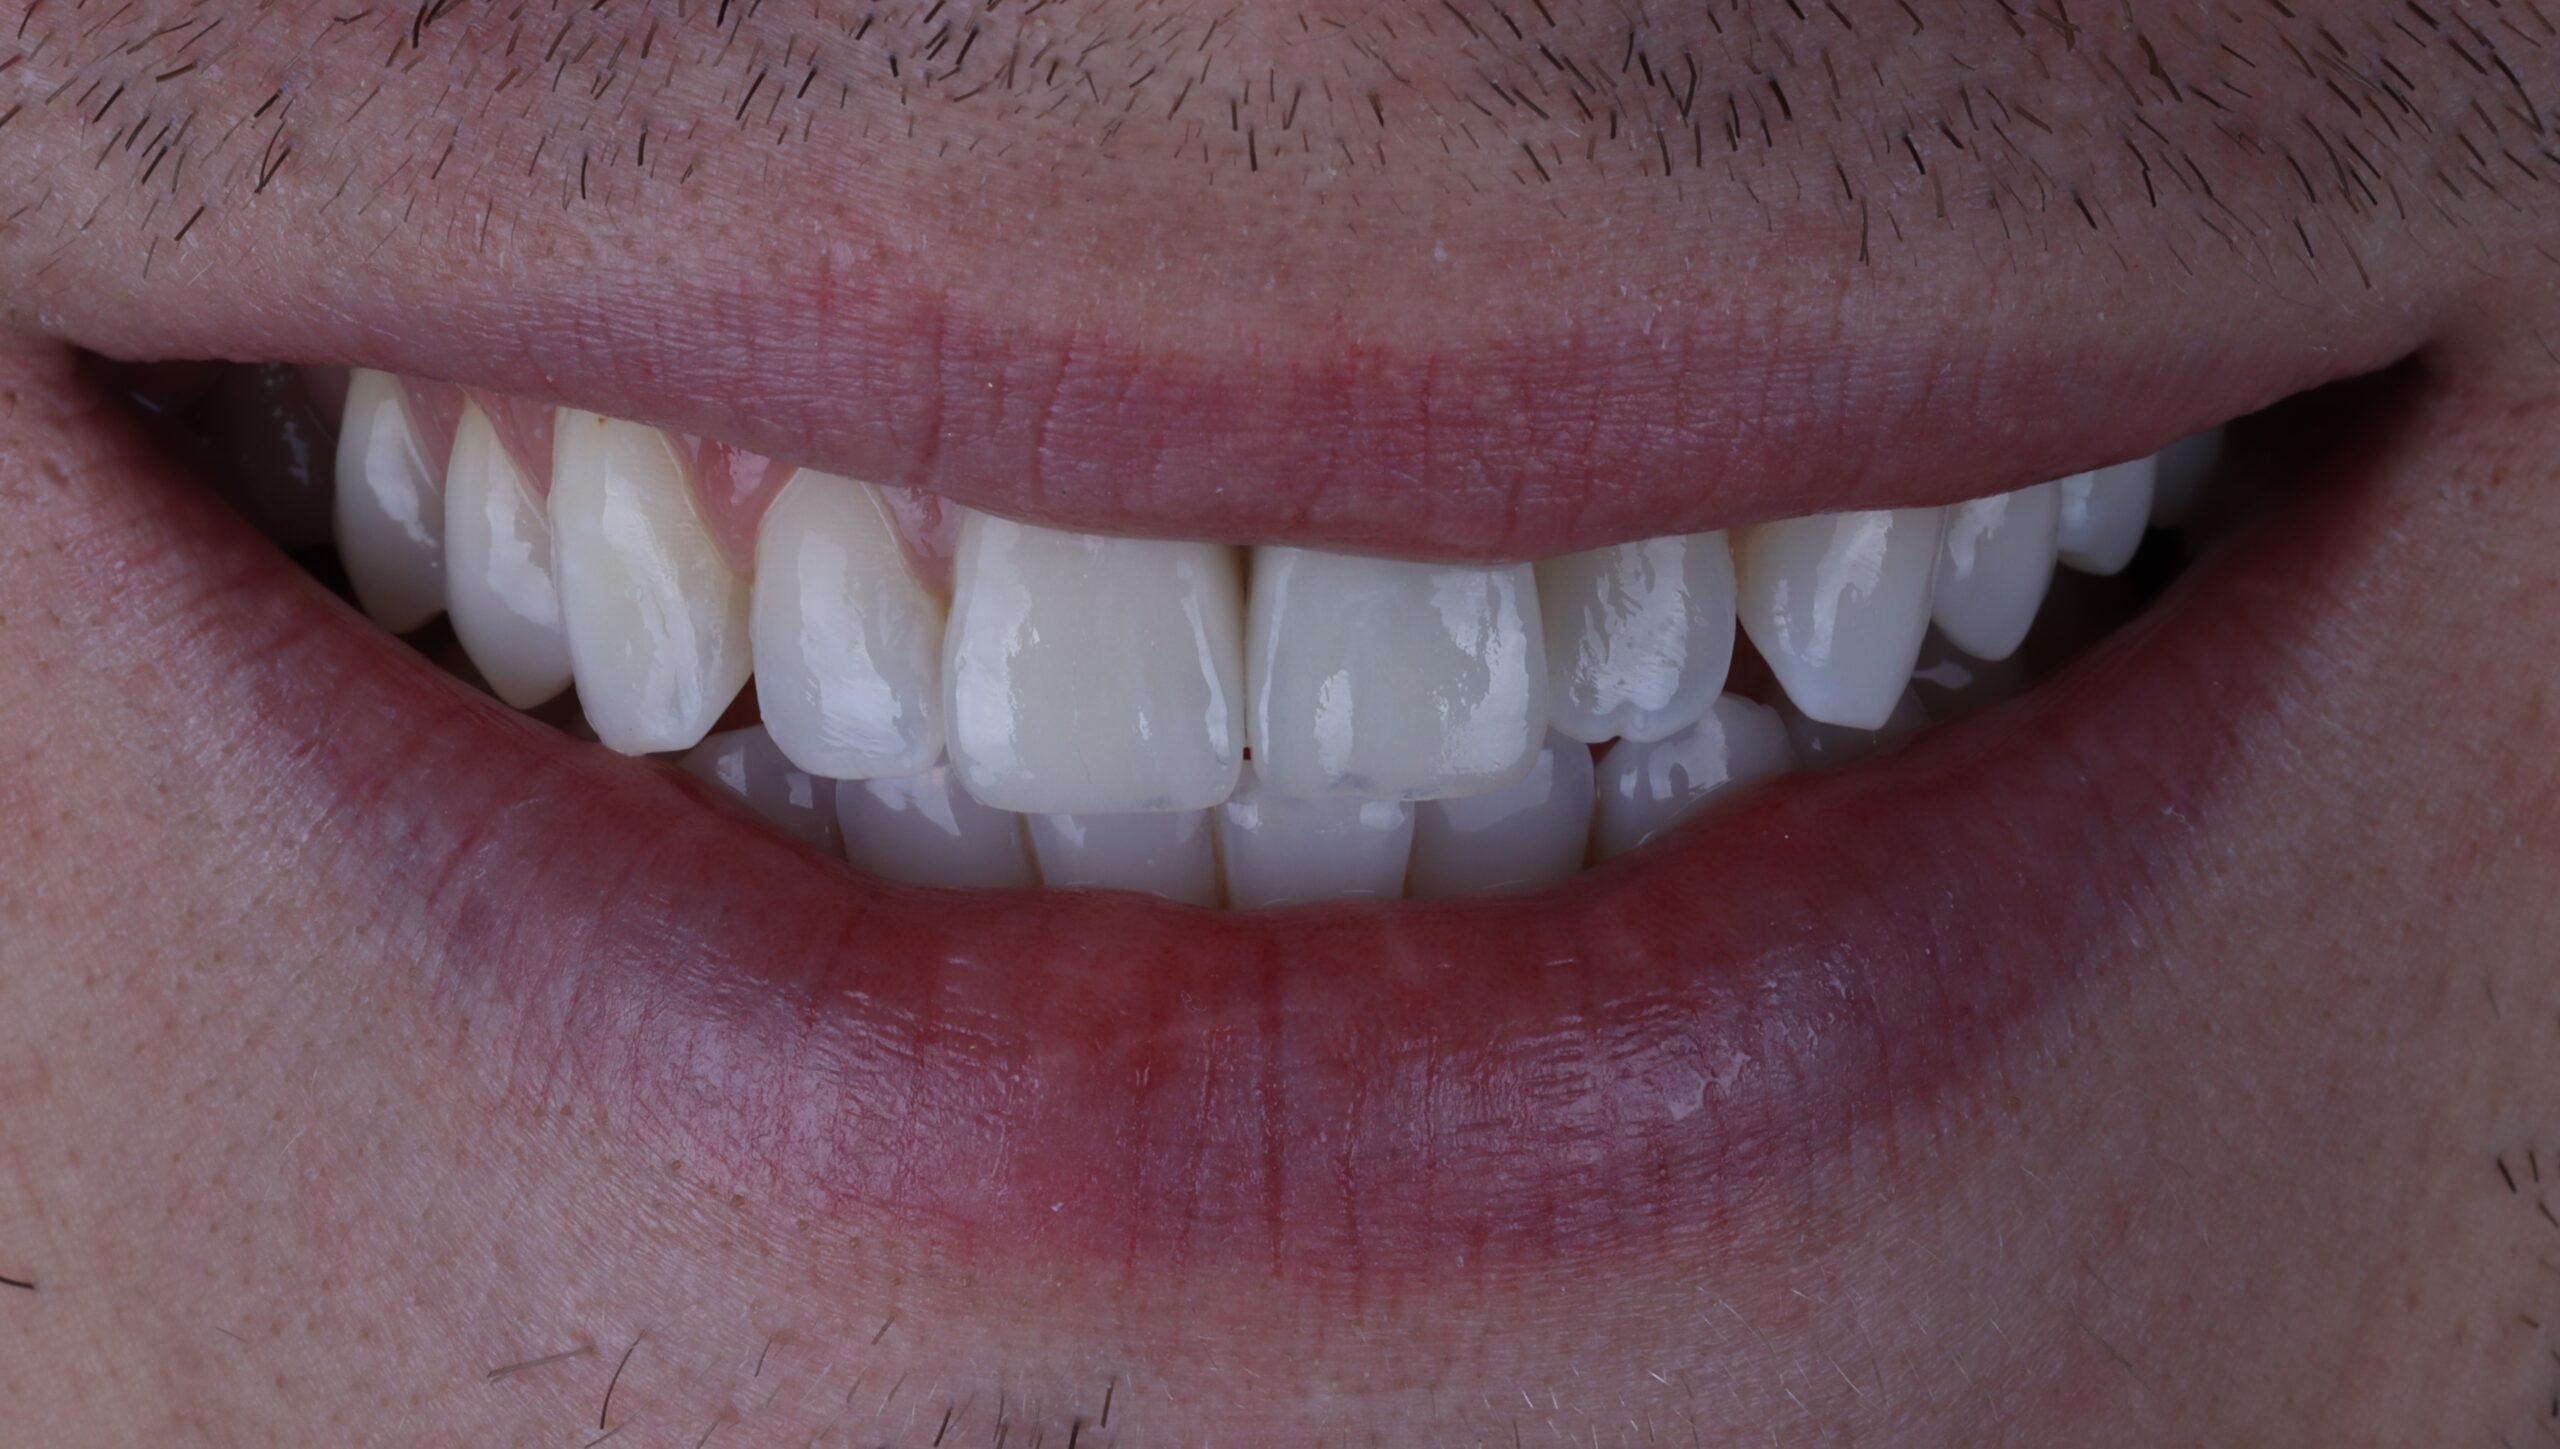 Teeth whitening followed by ICON treatment